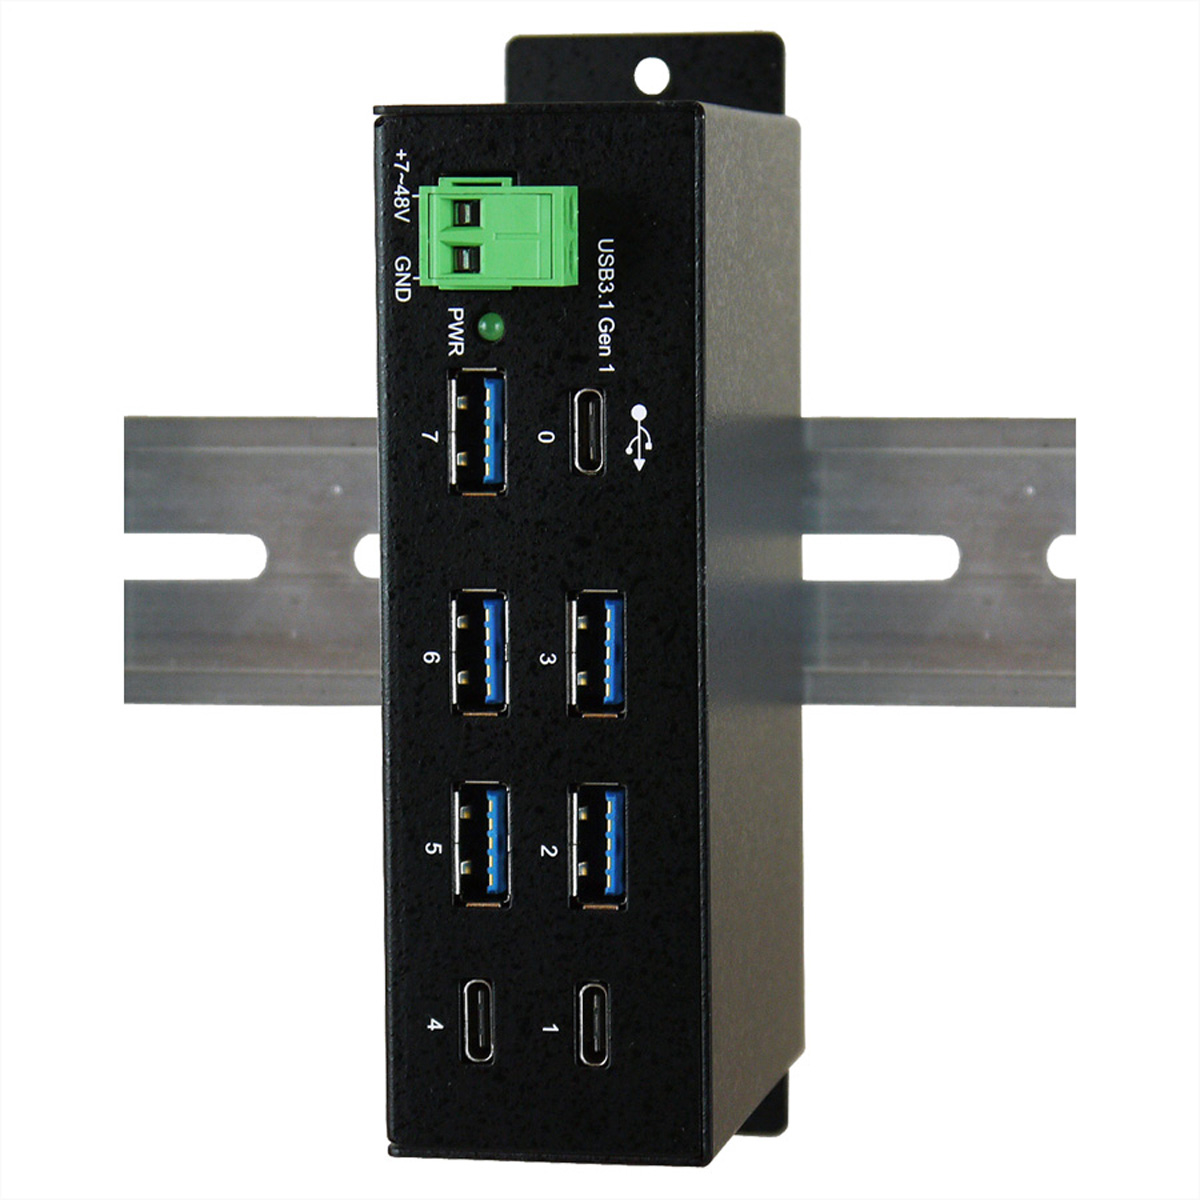 EXSYS EX-1196HMS 7 Port USB 3.2 Gen1 HUB C-Buchse, 15KV ESD Surge Protection